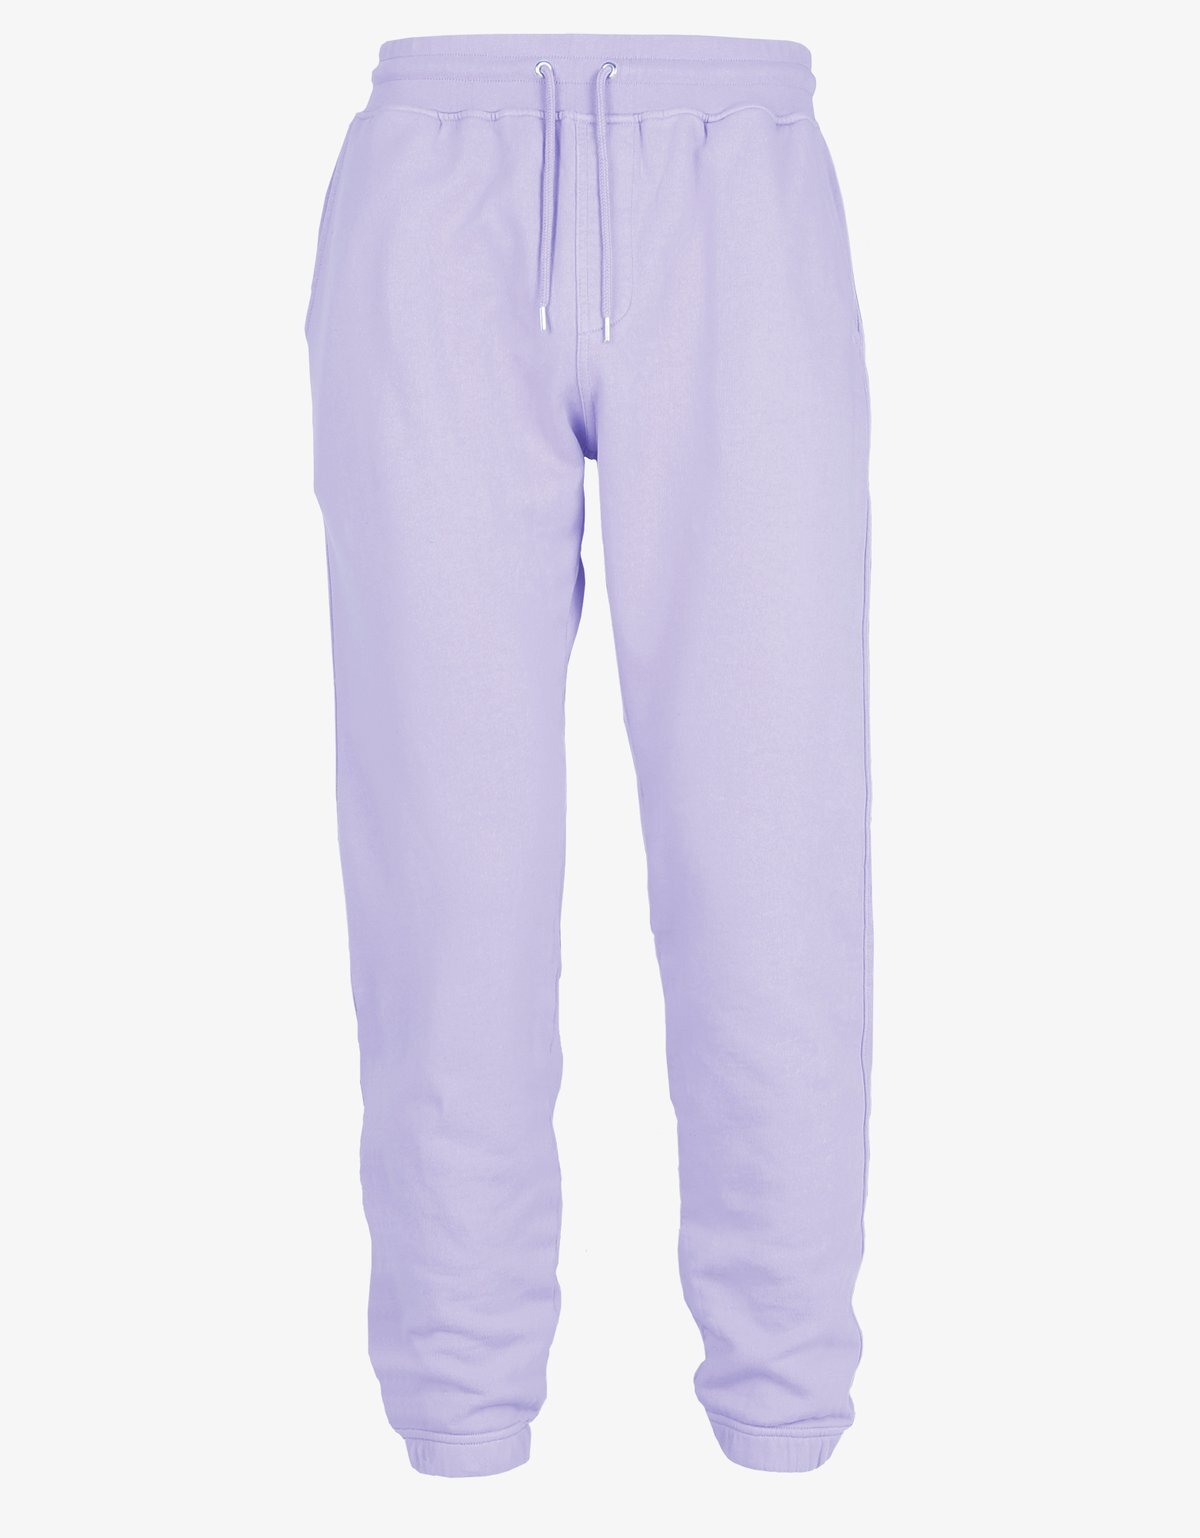 Classic_Organic_Sweatpants-Pants-CS1009-Soft_Lavender_600x@2x.jpg